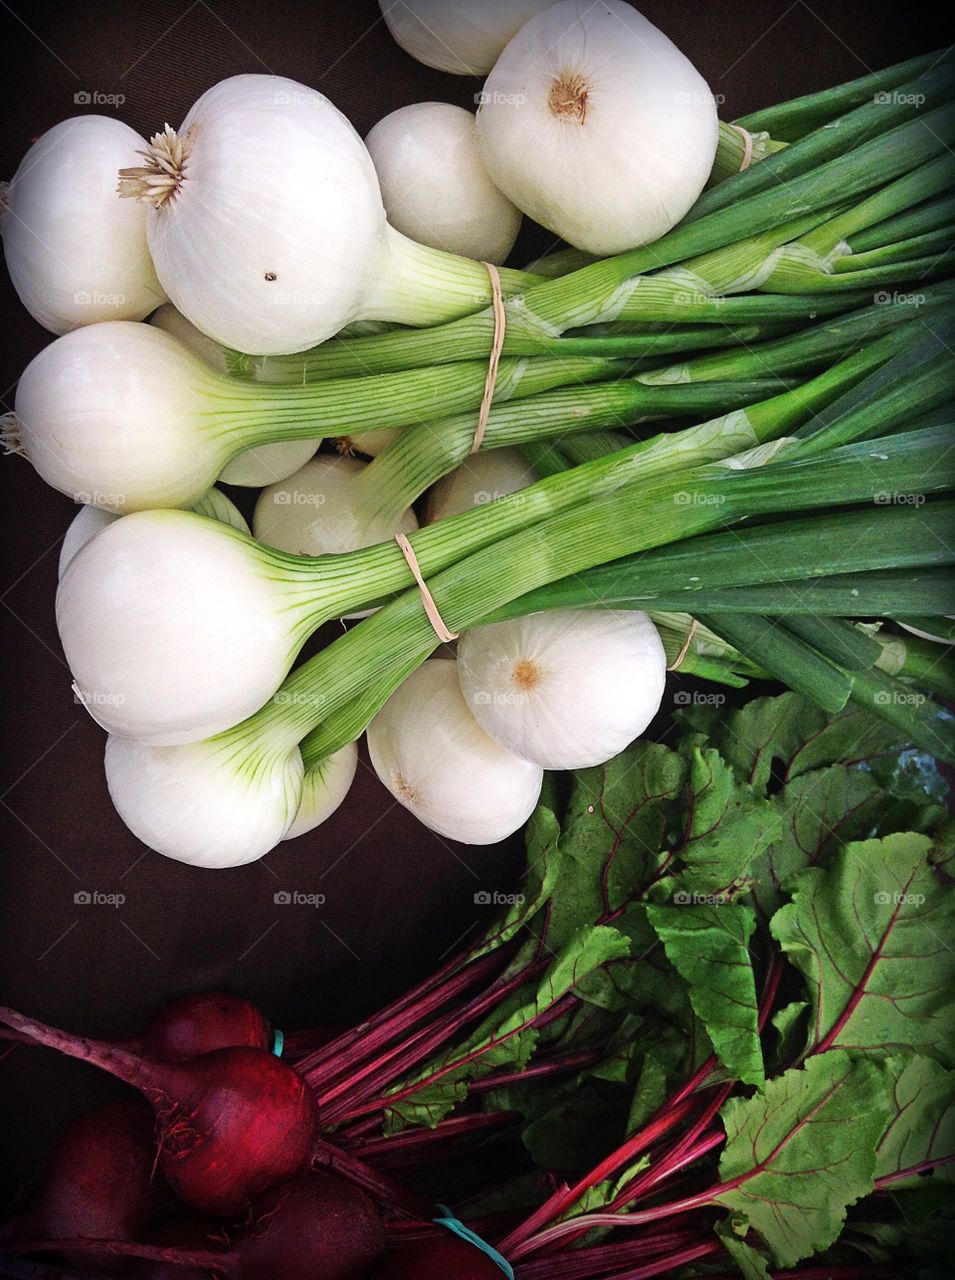 White onions at farmer's market